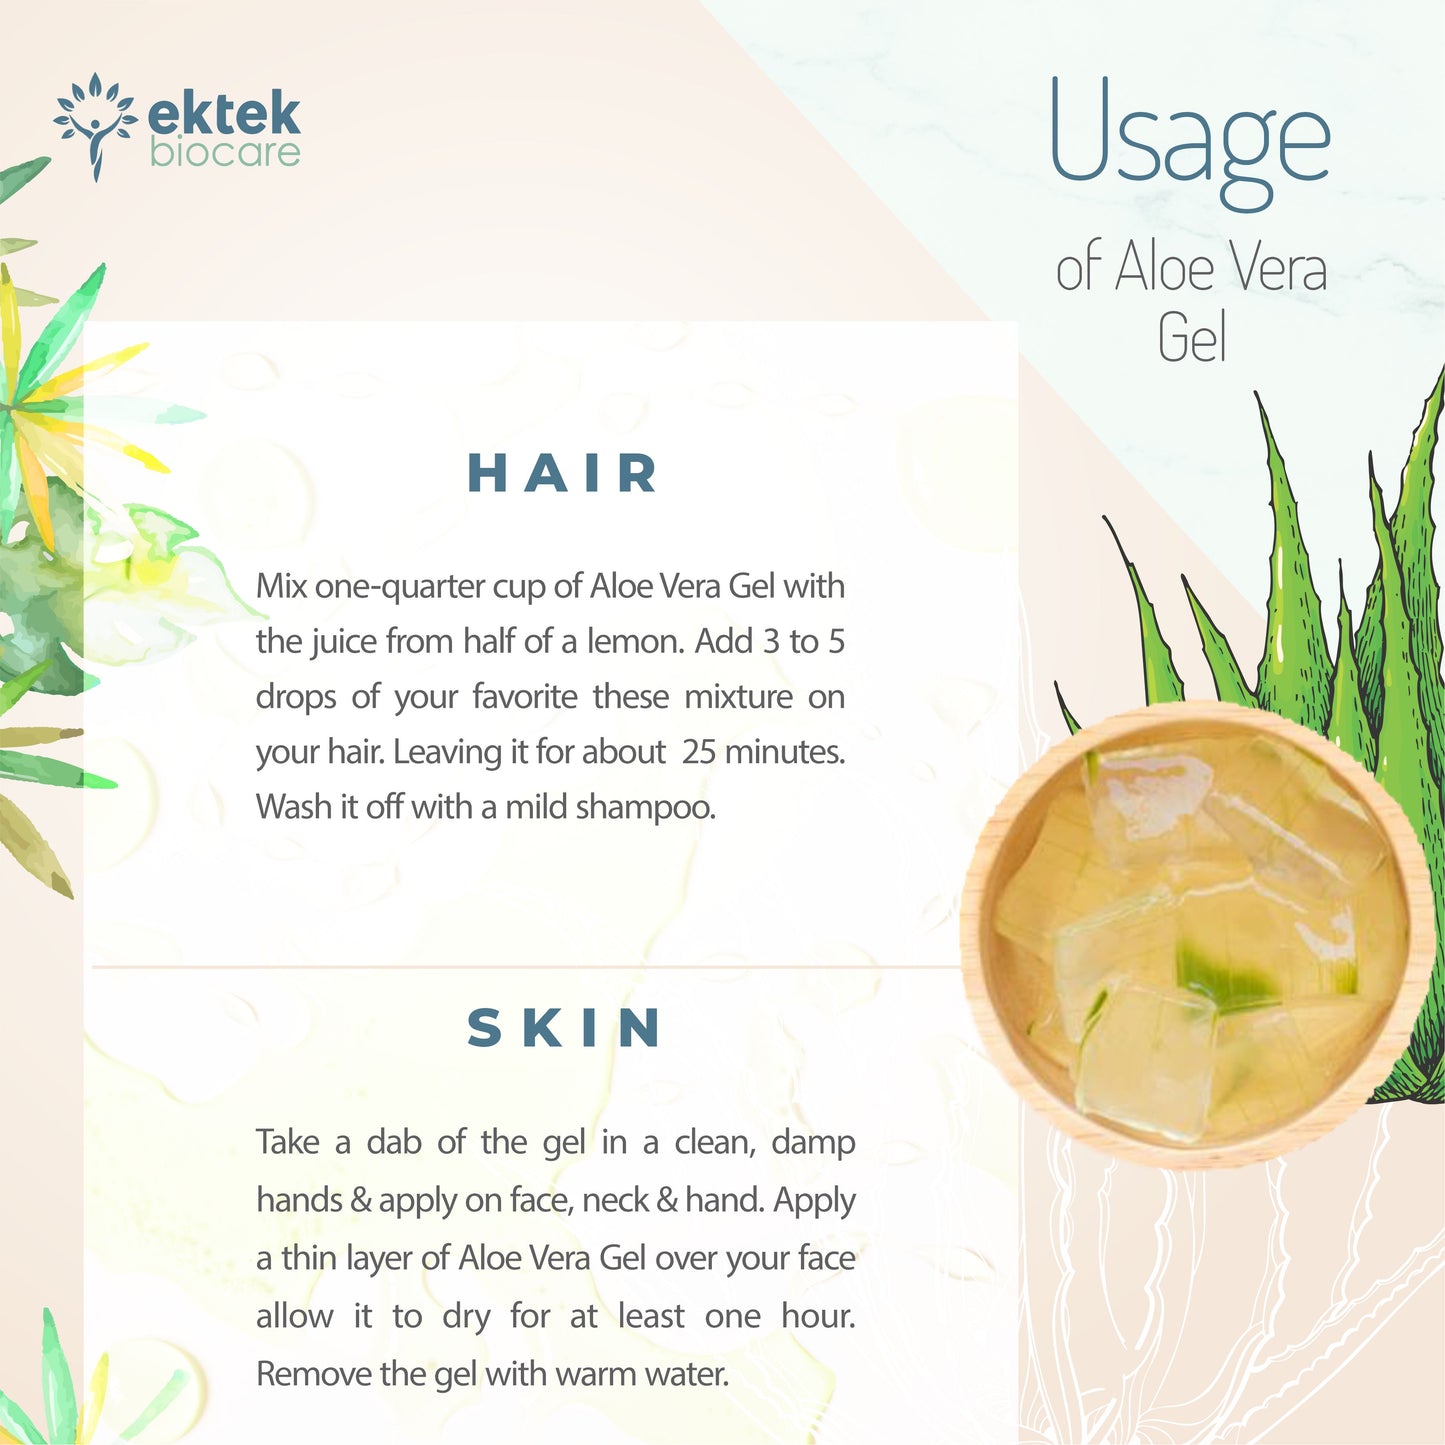 Aloe Vera Moisturizing Gel | Pure Aloe Vera | Body Care | Pack of 2